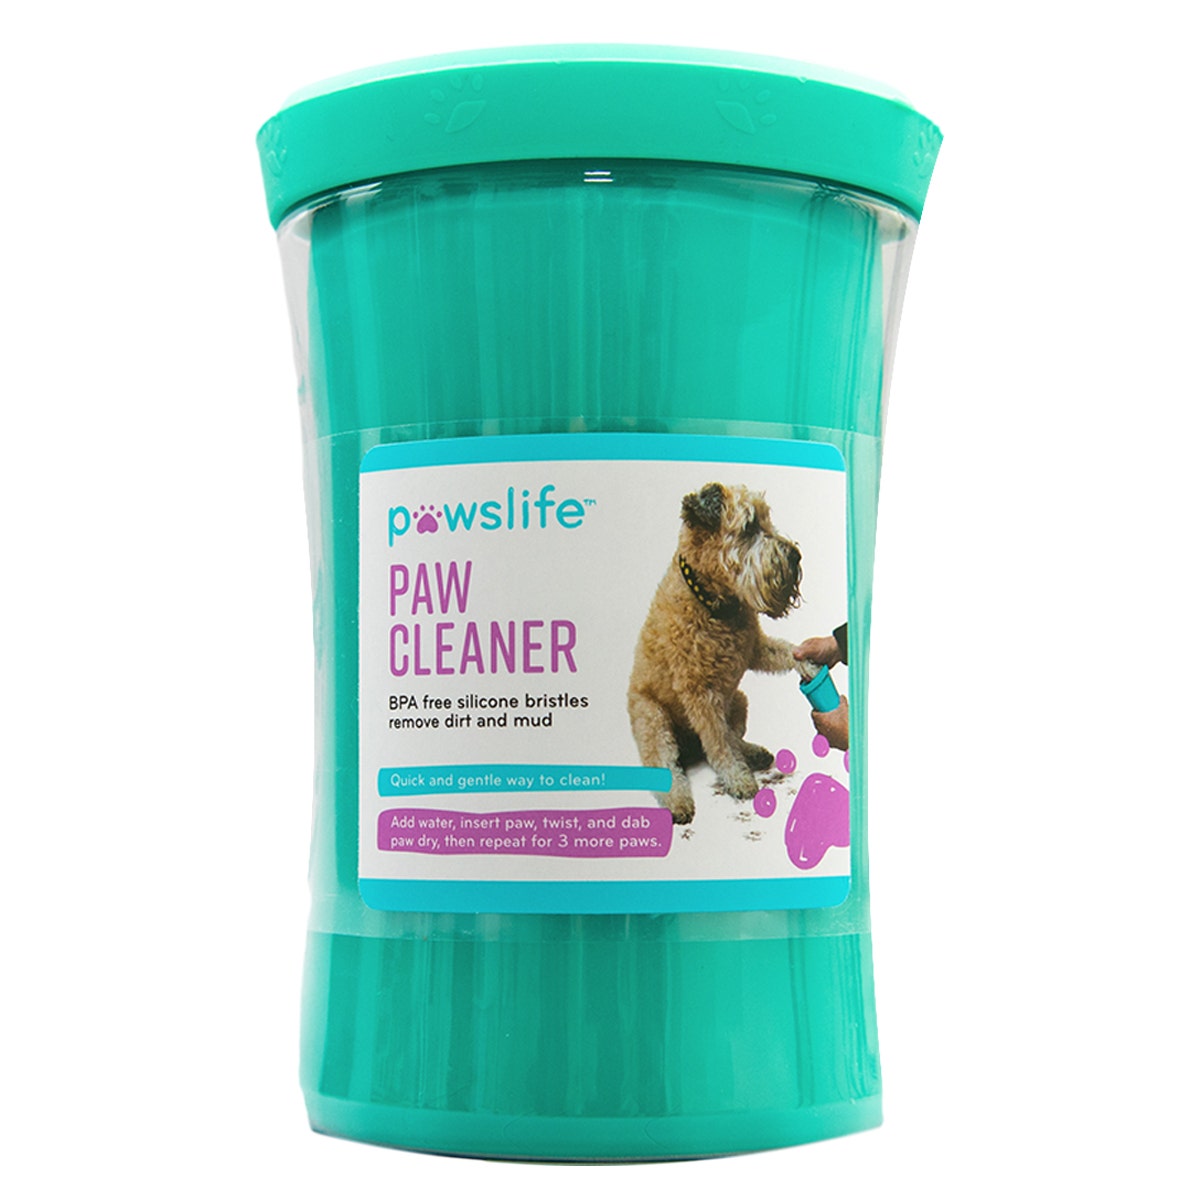 Pawslife Dog Paw Cleaner – Silicone Bristles Brush Away Dirt